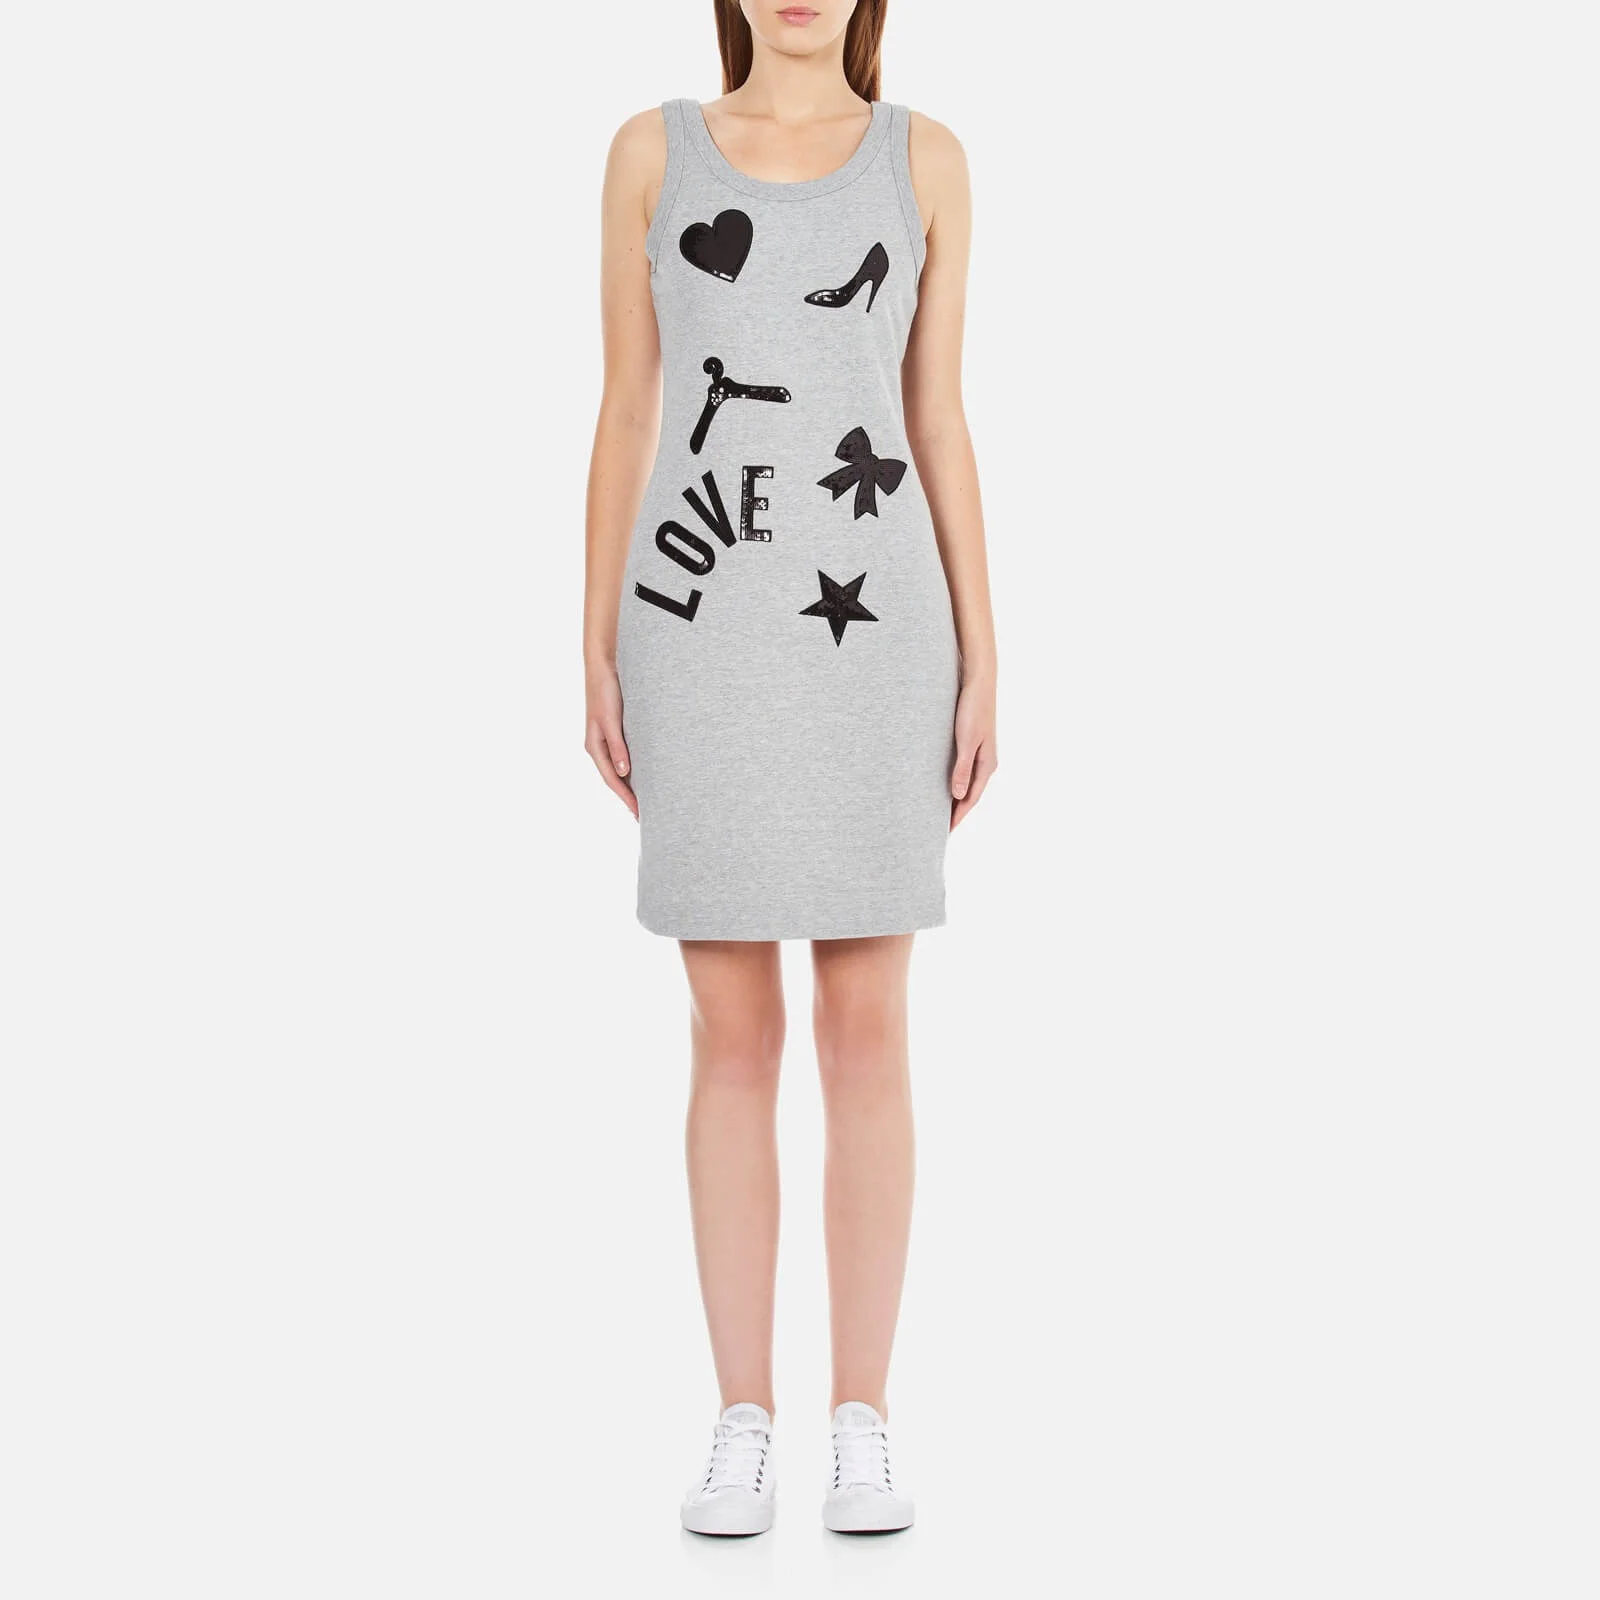 Love Moschino Women's Love Vest Dress - Grey Image 1